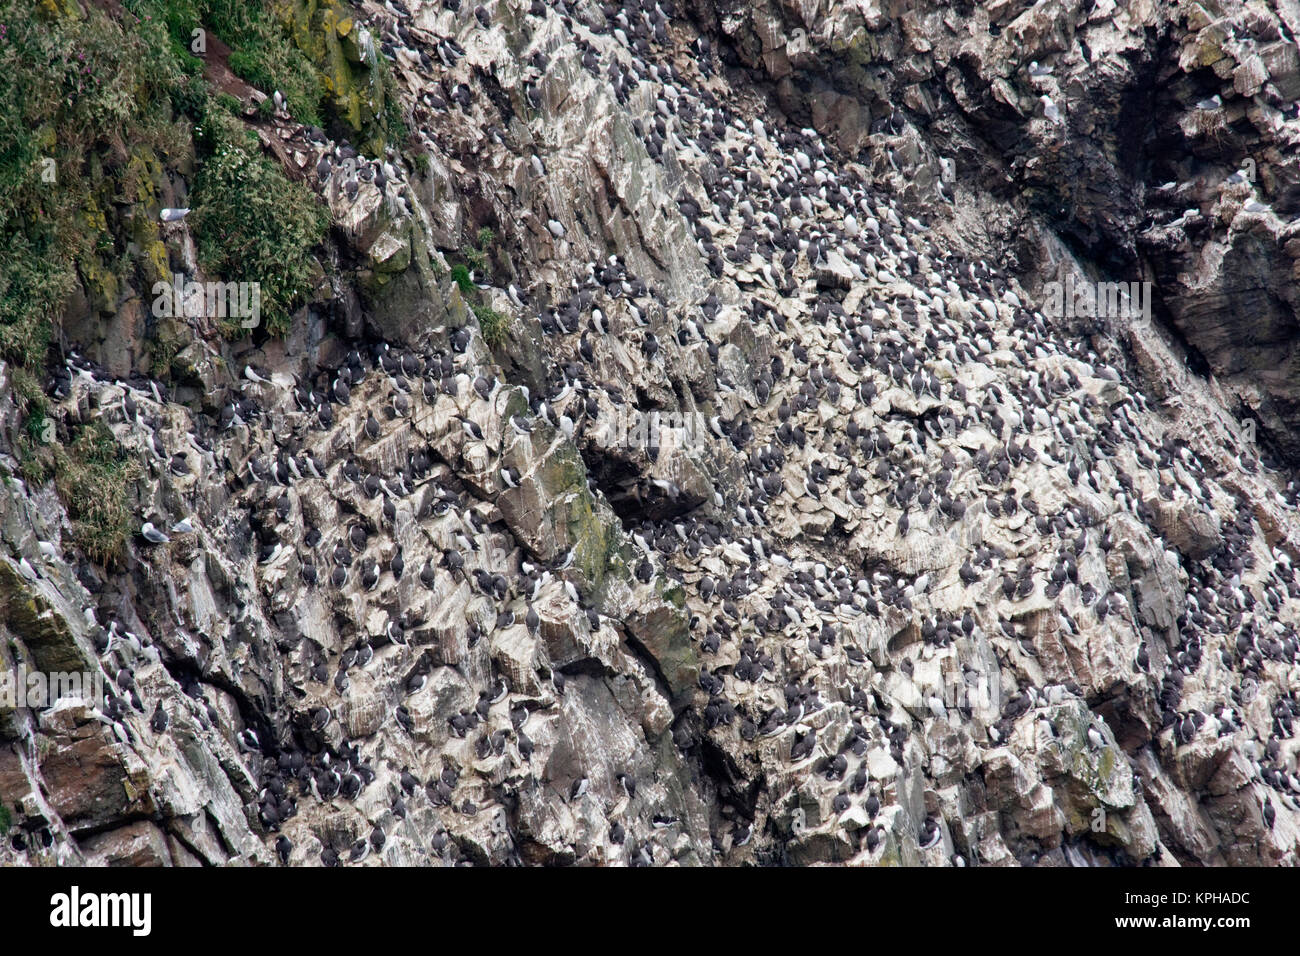 Guillemot nesting colony on cliffs at Skomer Island, Wales Stock Photo